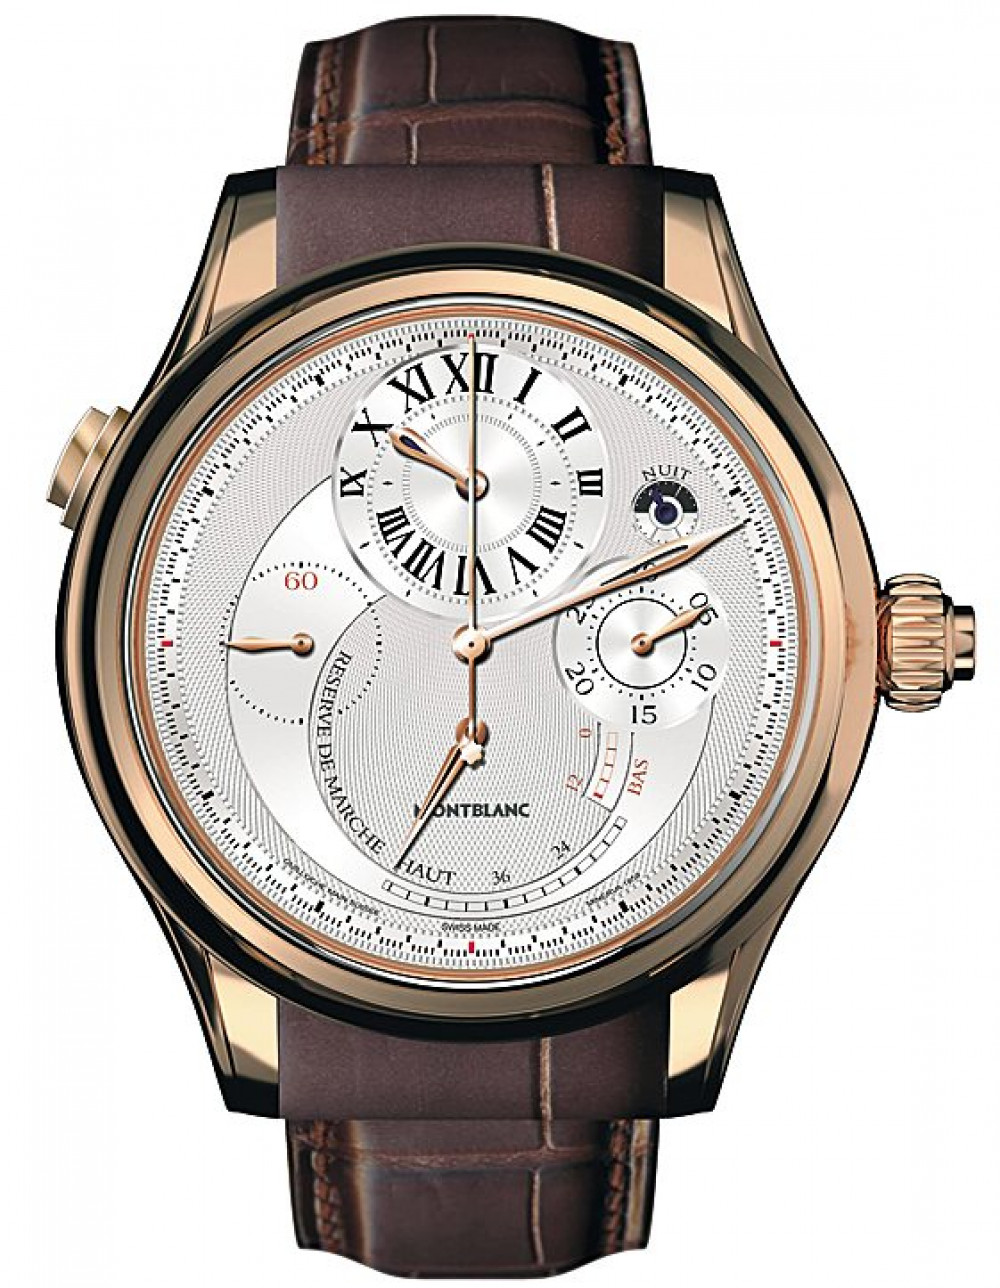 Zegarek firmy Montblanc, model Villeret Grand Chronograph Regulateur